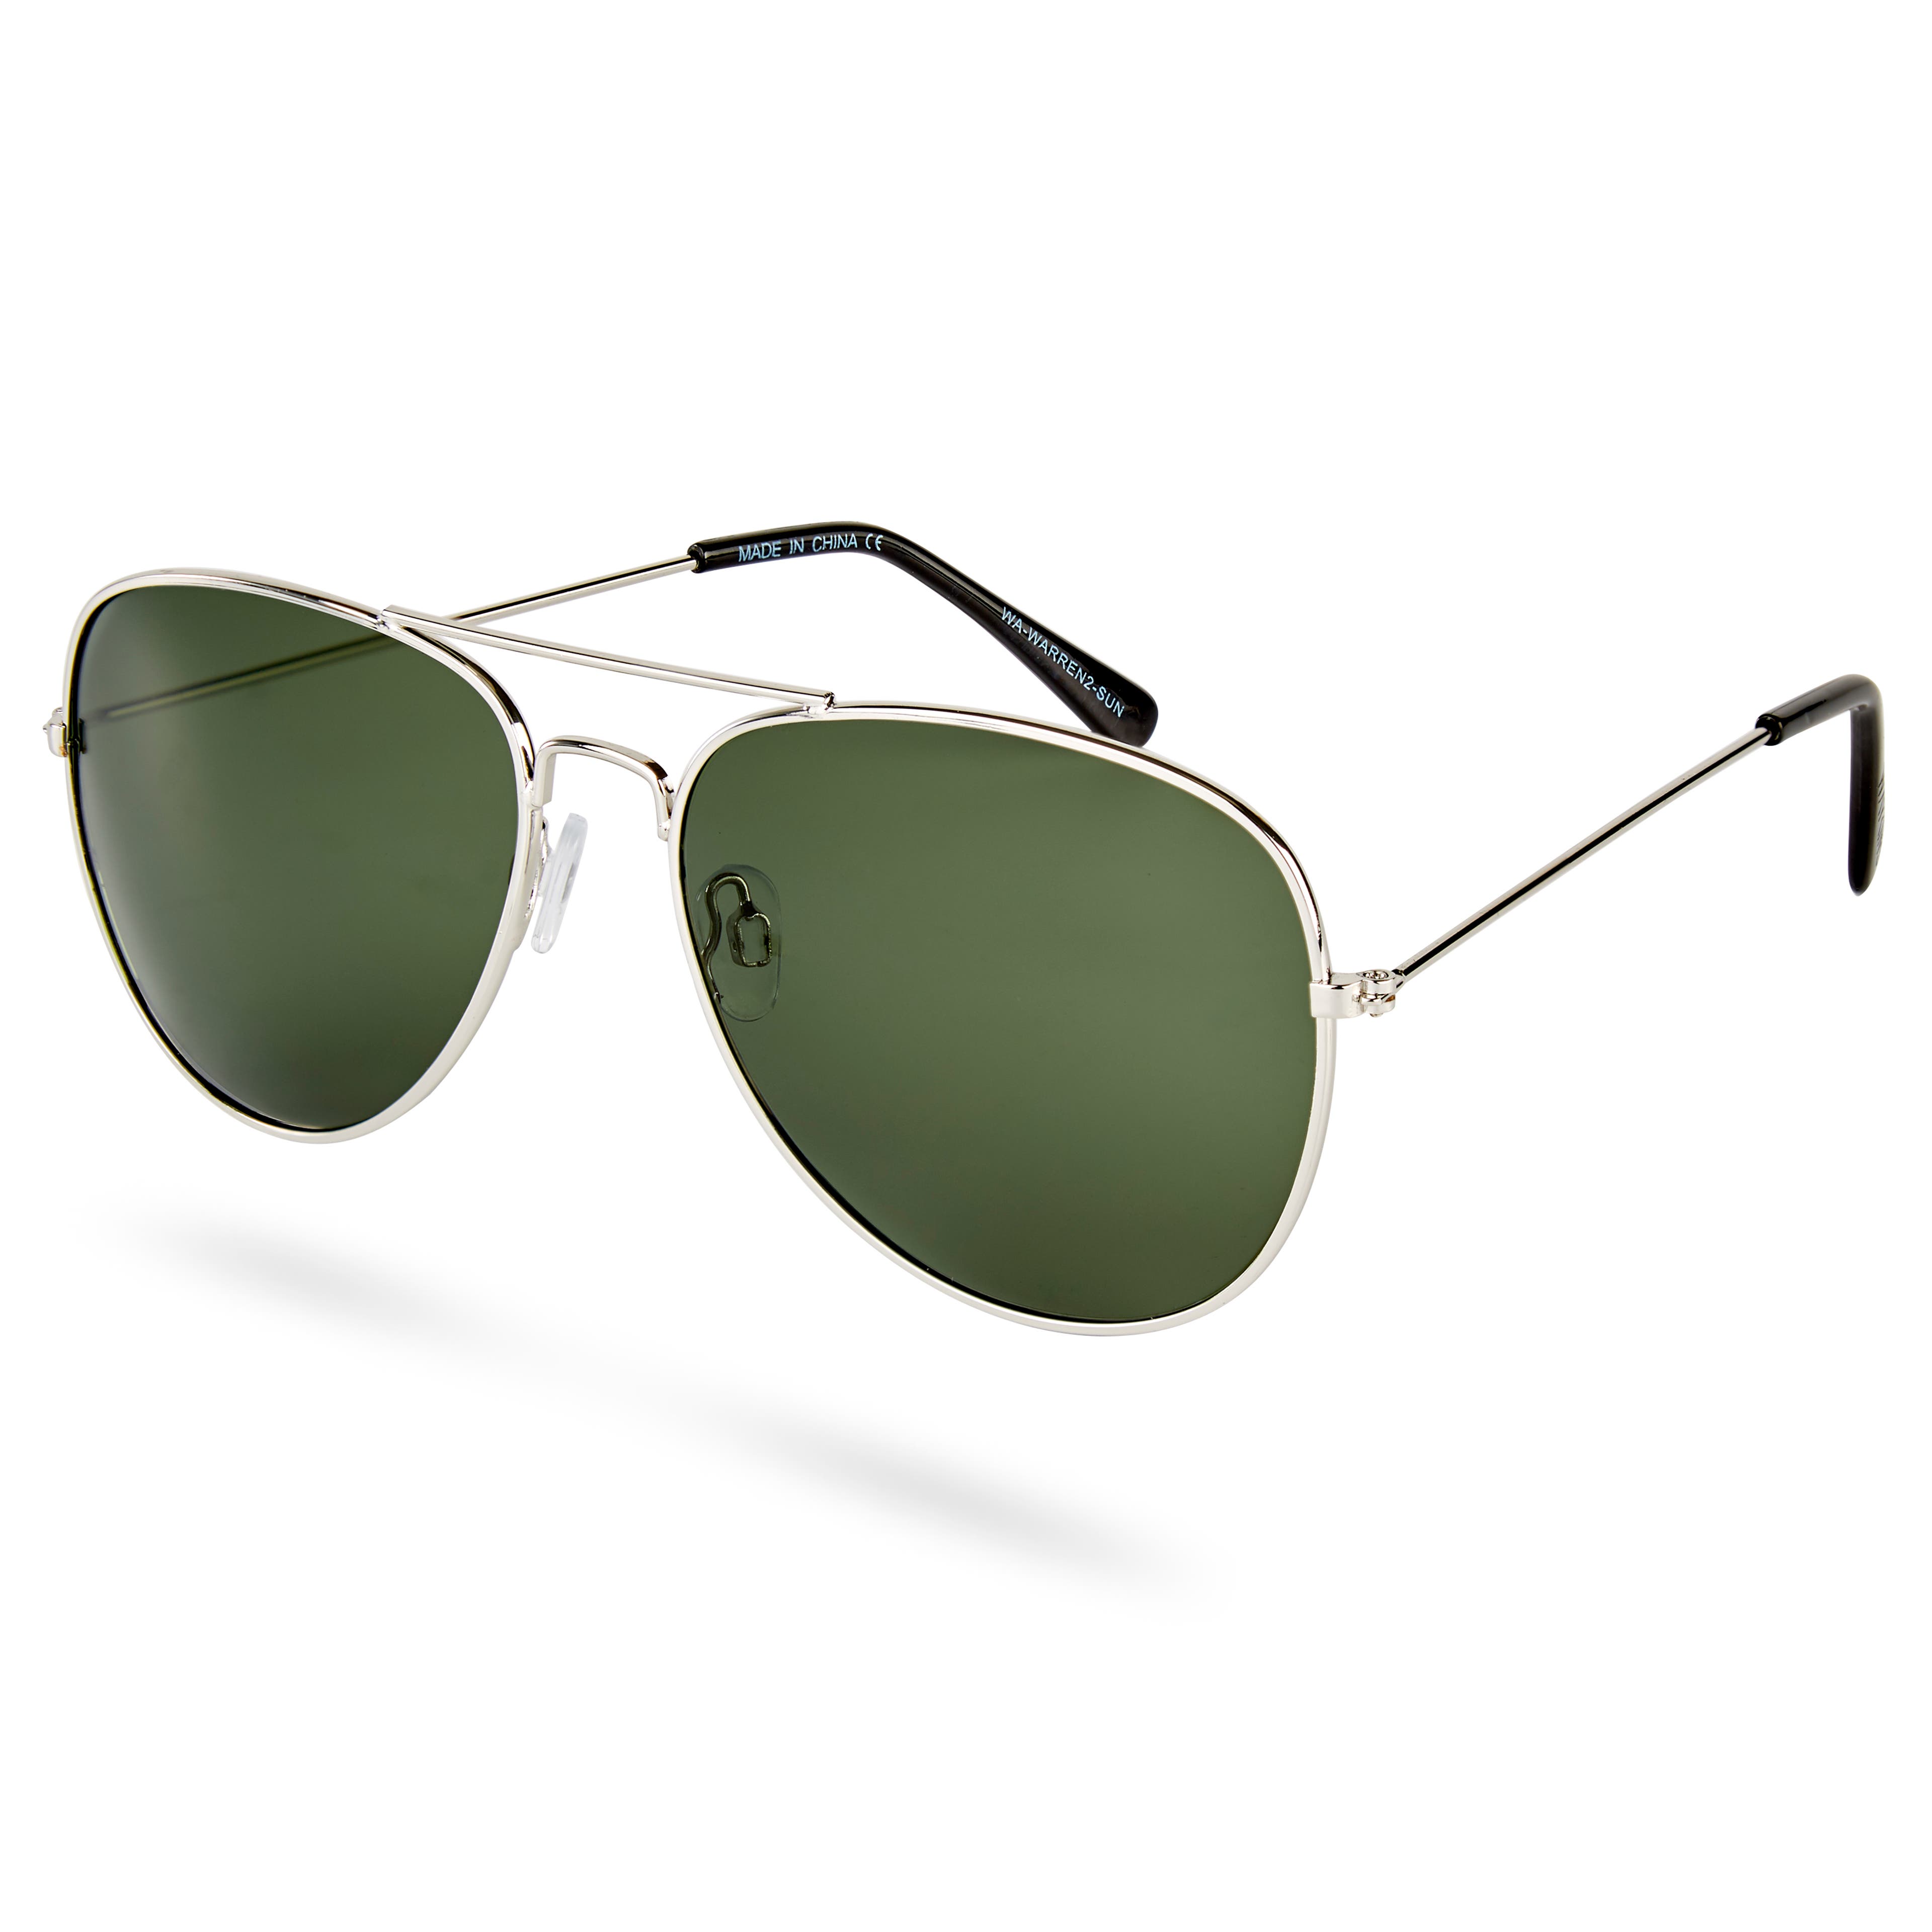 Vista | Silver-Tone & Olive Green Aviator Sunglasses